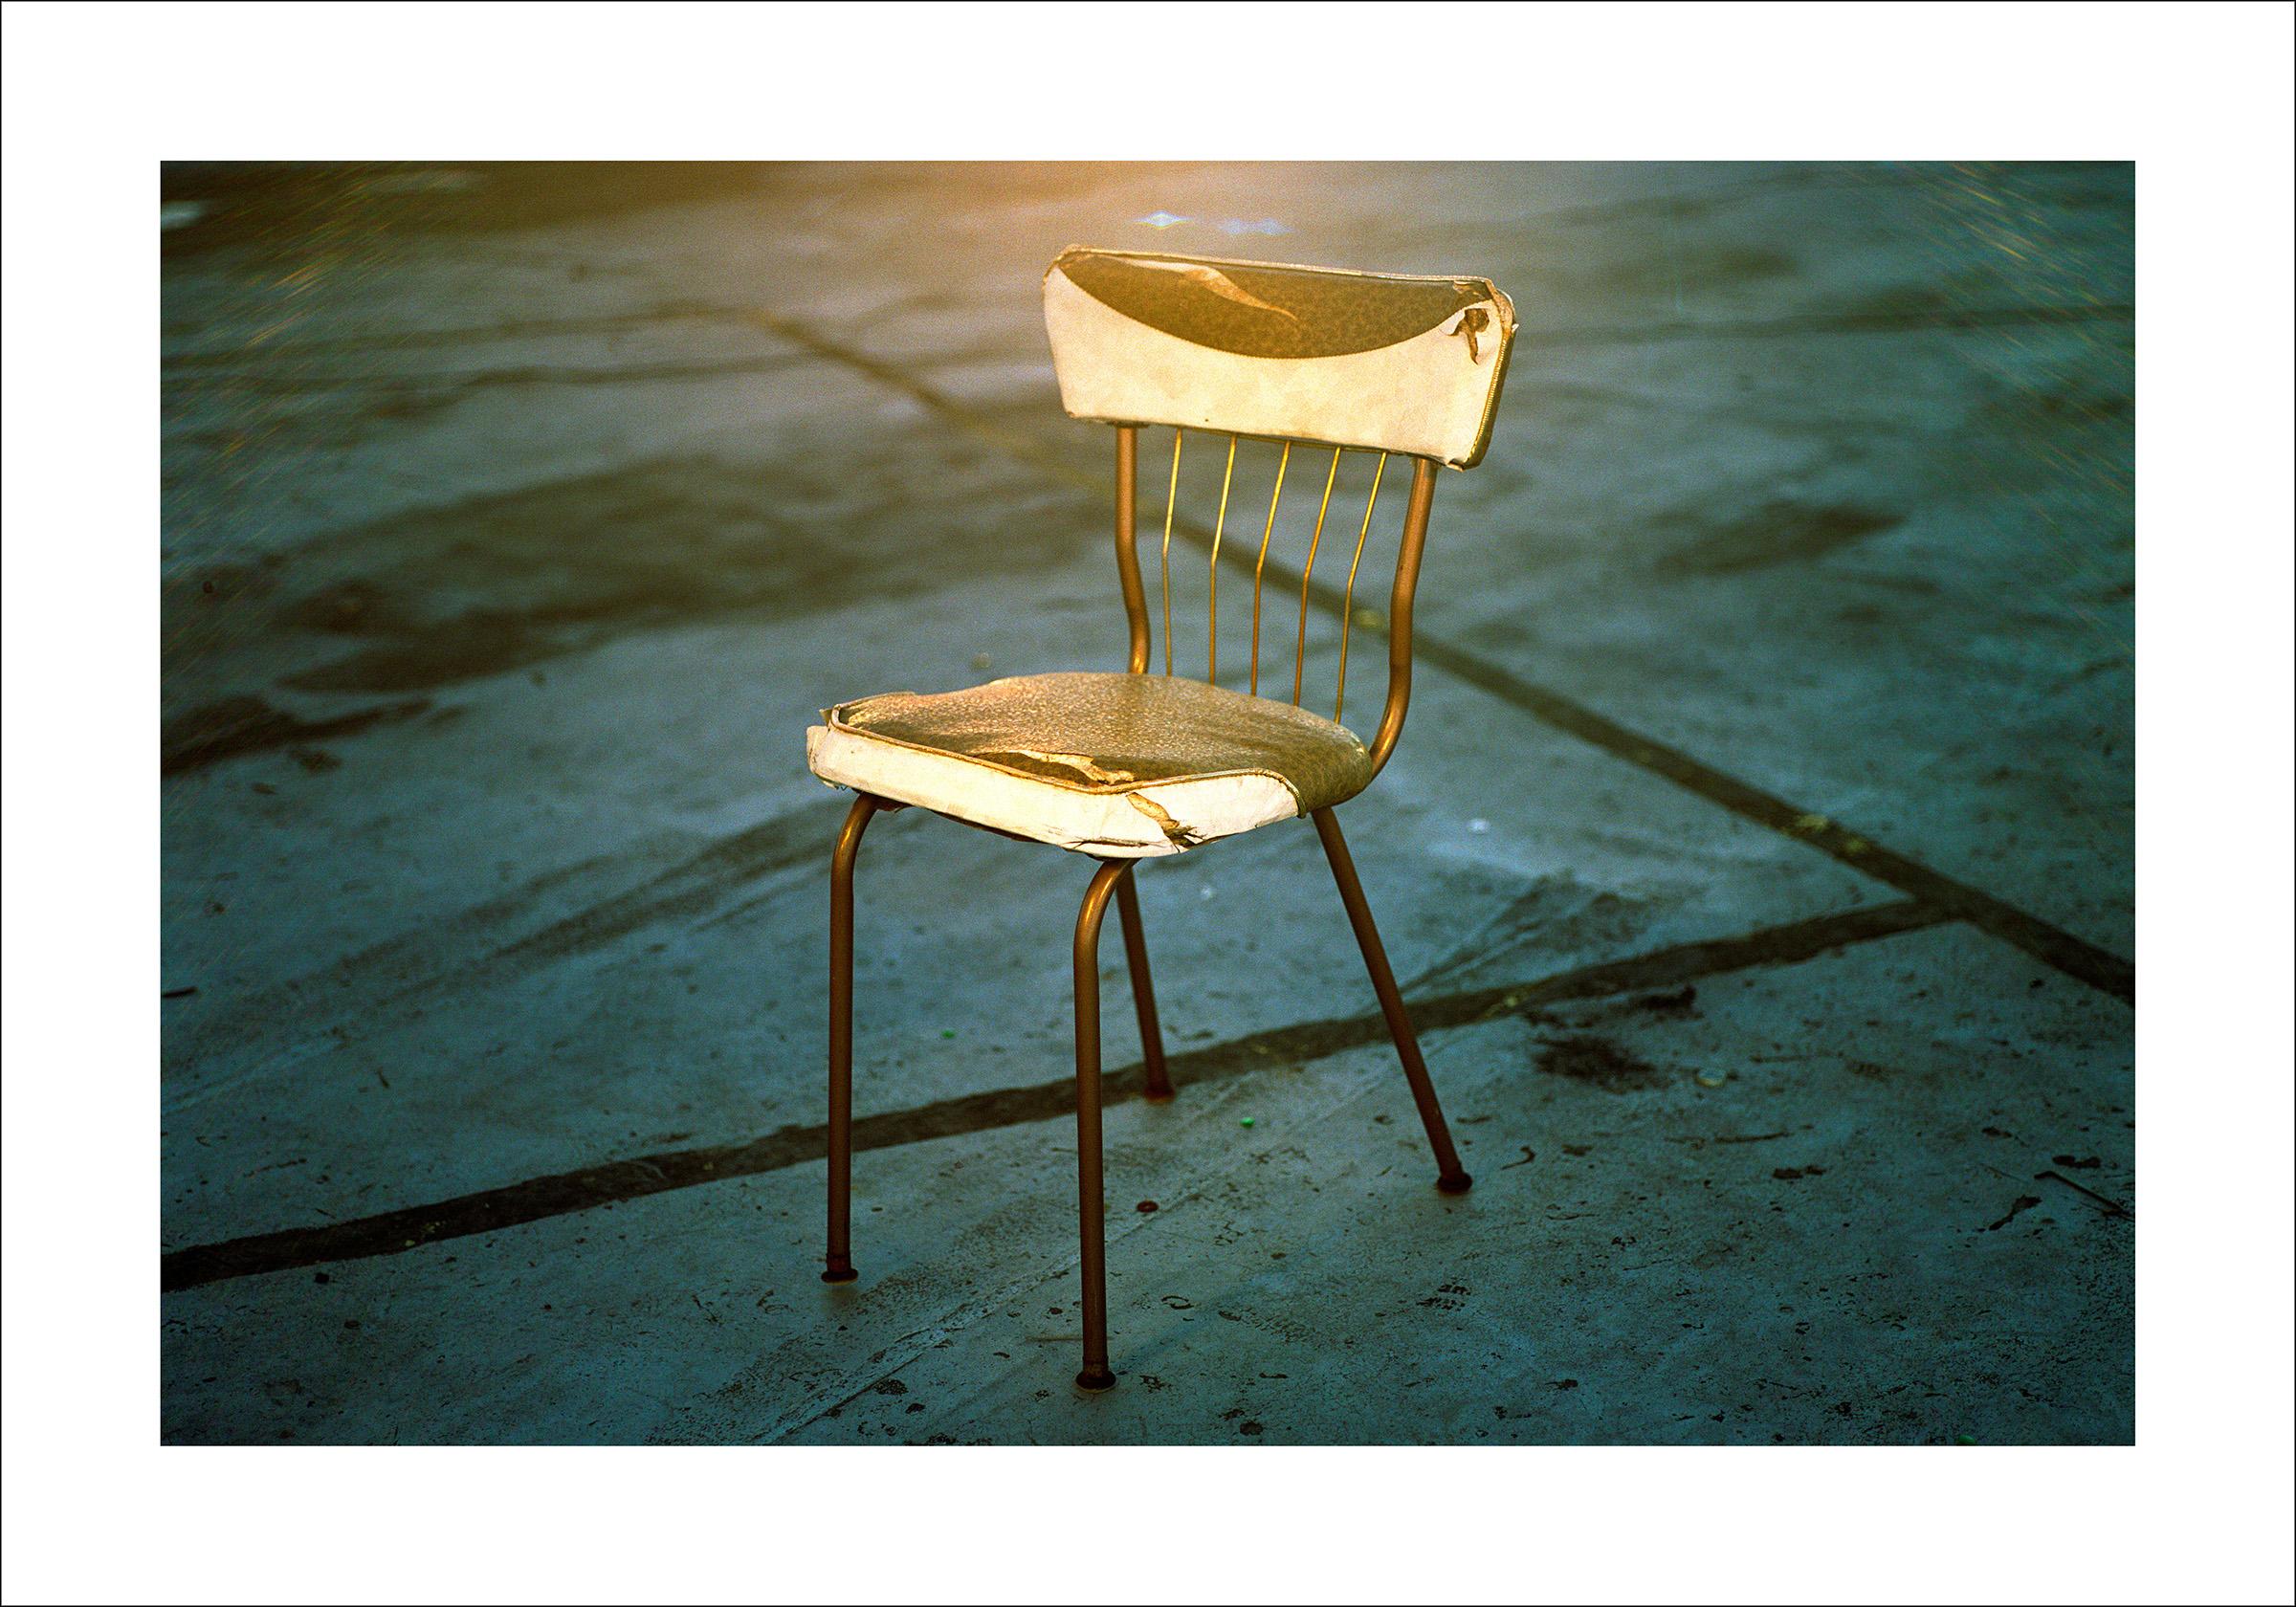 Photo Giclée Print, Antique Industrial Chair, 100x70cm, Photograph, Stylish Art